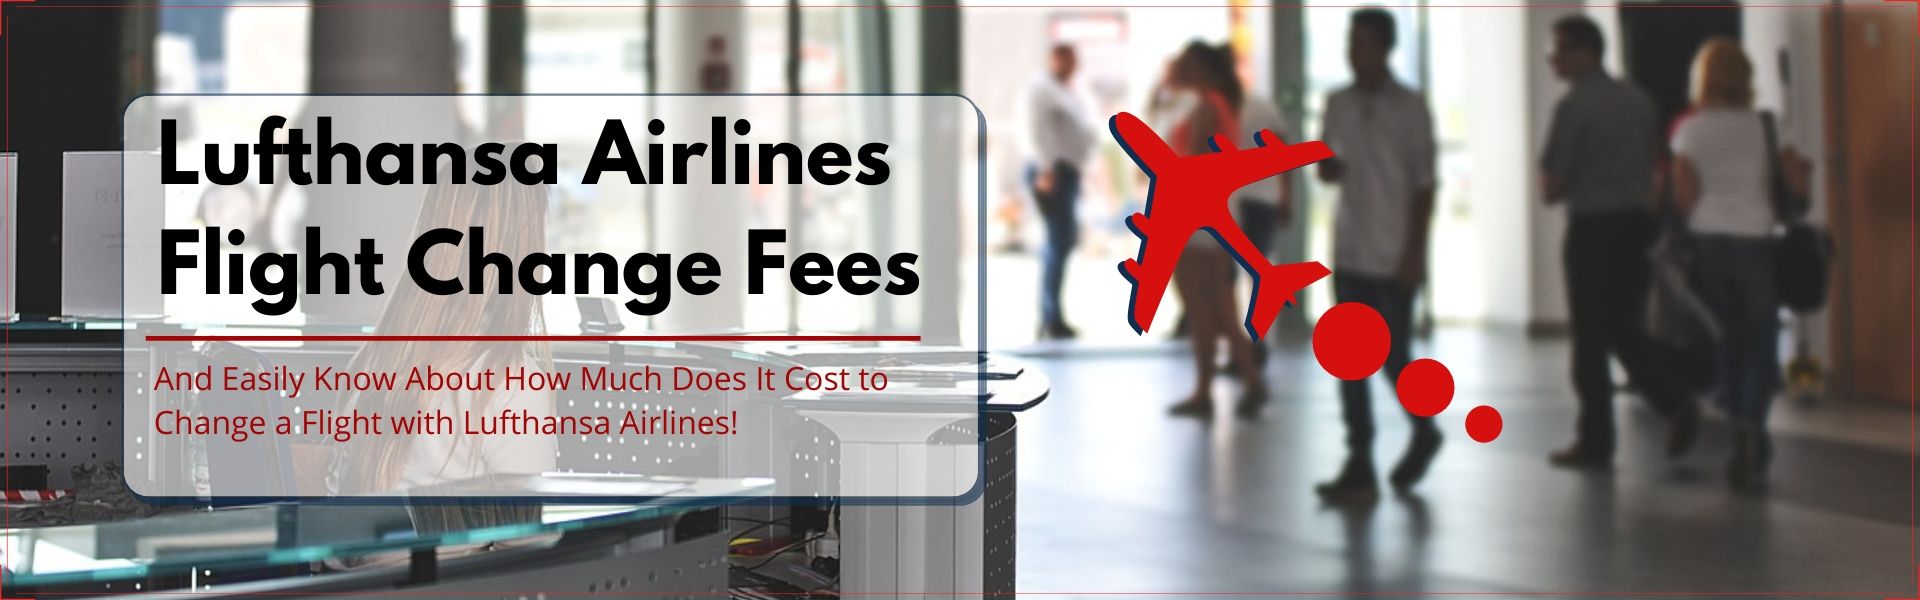 2020-06-23-06-54-24lufthansa airlines flight change fees